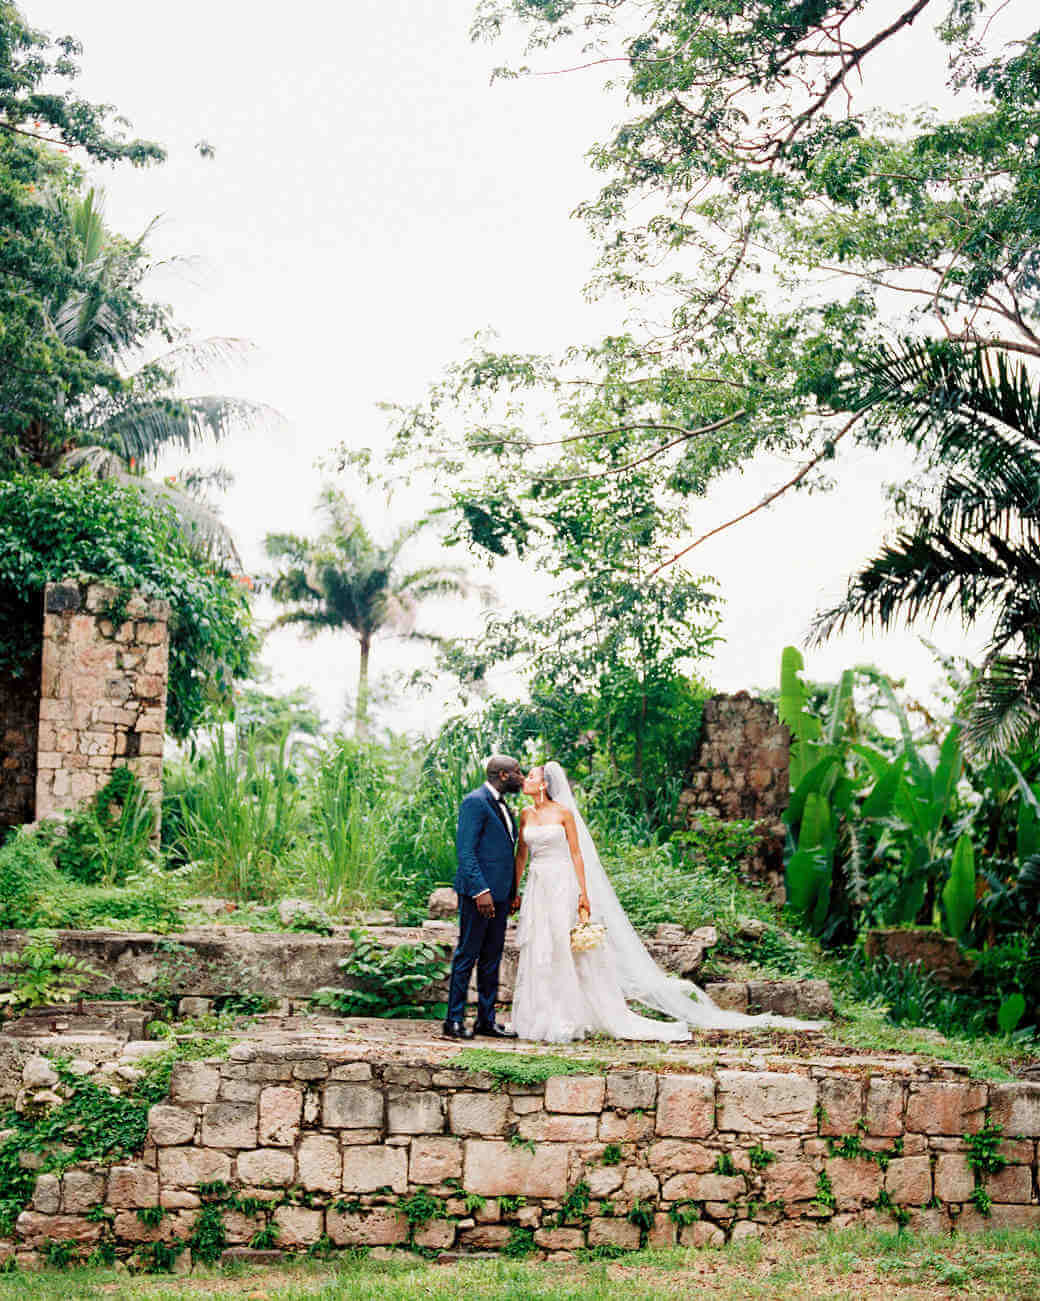 desti-land-destitv-bridefriends-guide-to-destination-weddings-podcast-014-black-destination-bride-blackdesti-desti-bride-interview-porsha-montego-bay-jamaica-terry-porsha-paris-engagement-10.jpg